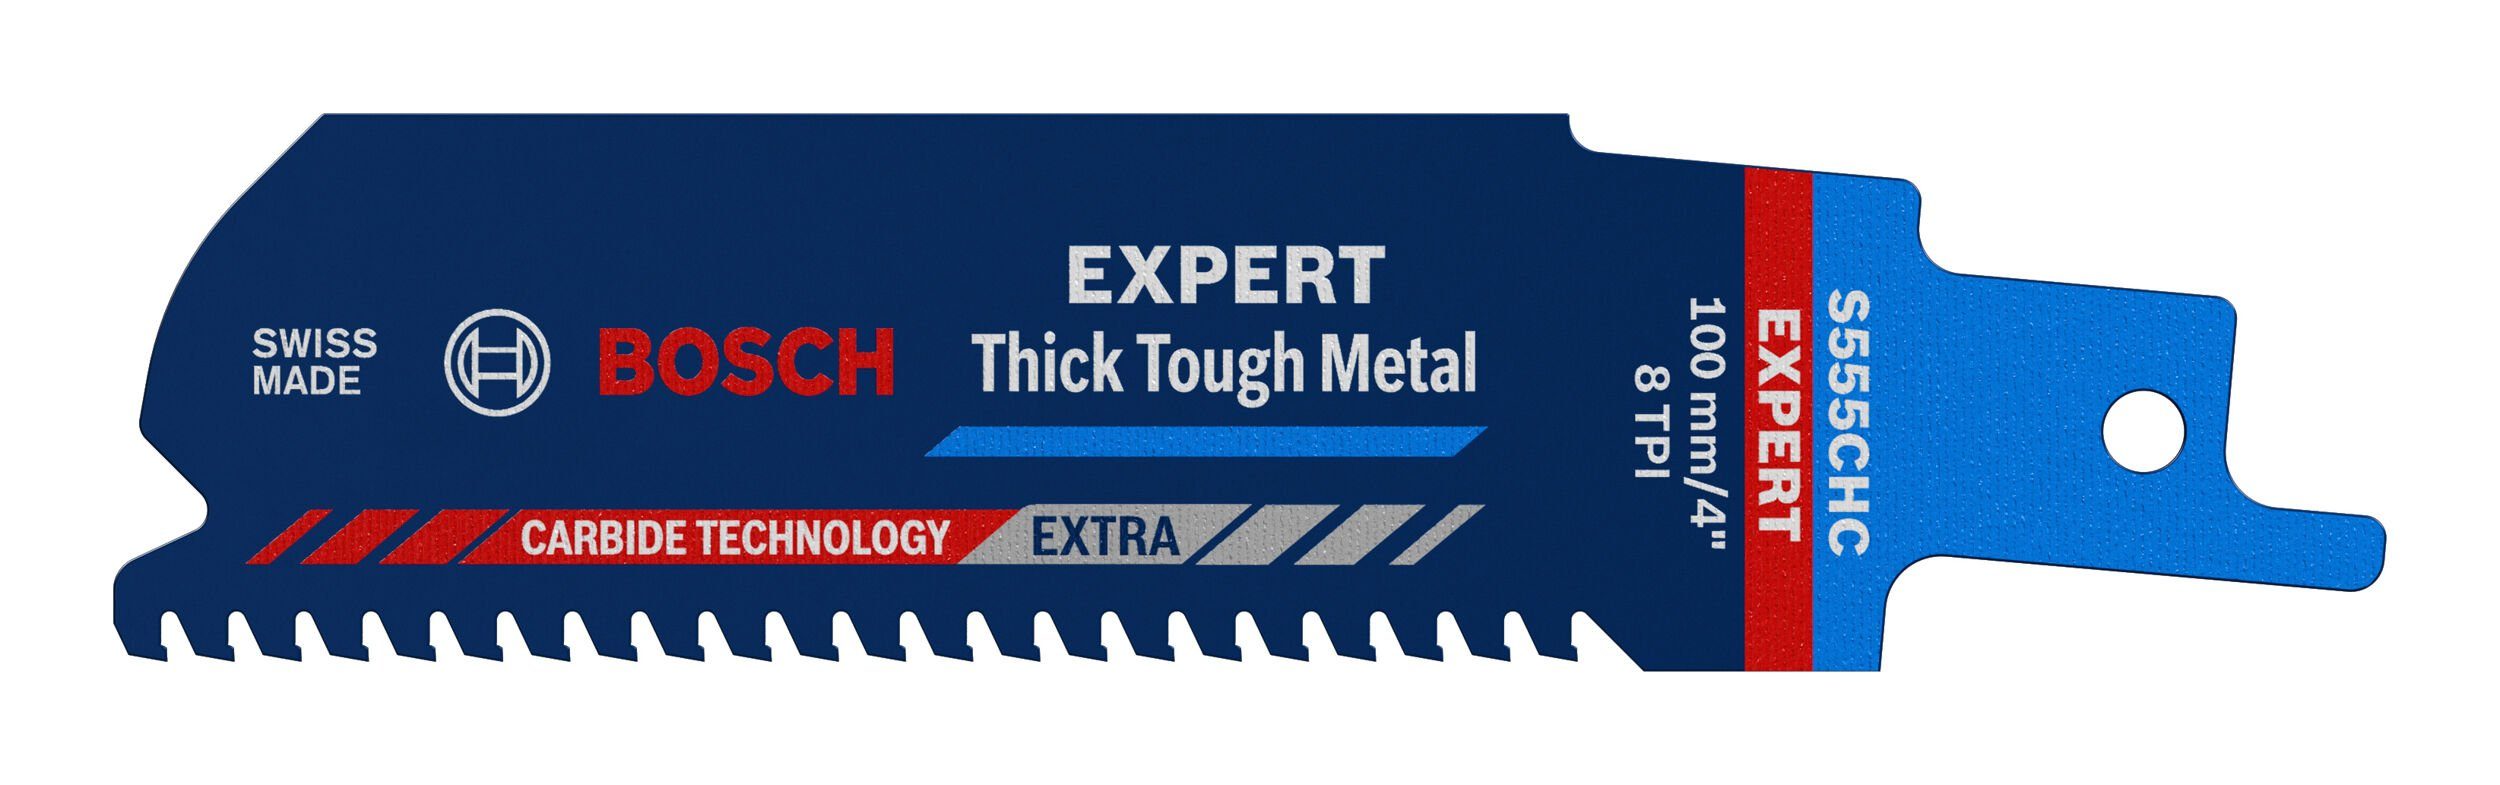 BOSCH Säbelsägeblatt Endurance zu in 555 bis for als länger HeavyMetal, S robustem ein CHM, Expert Material Bimetall-Blatt 100-mal Hält